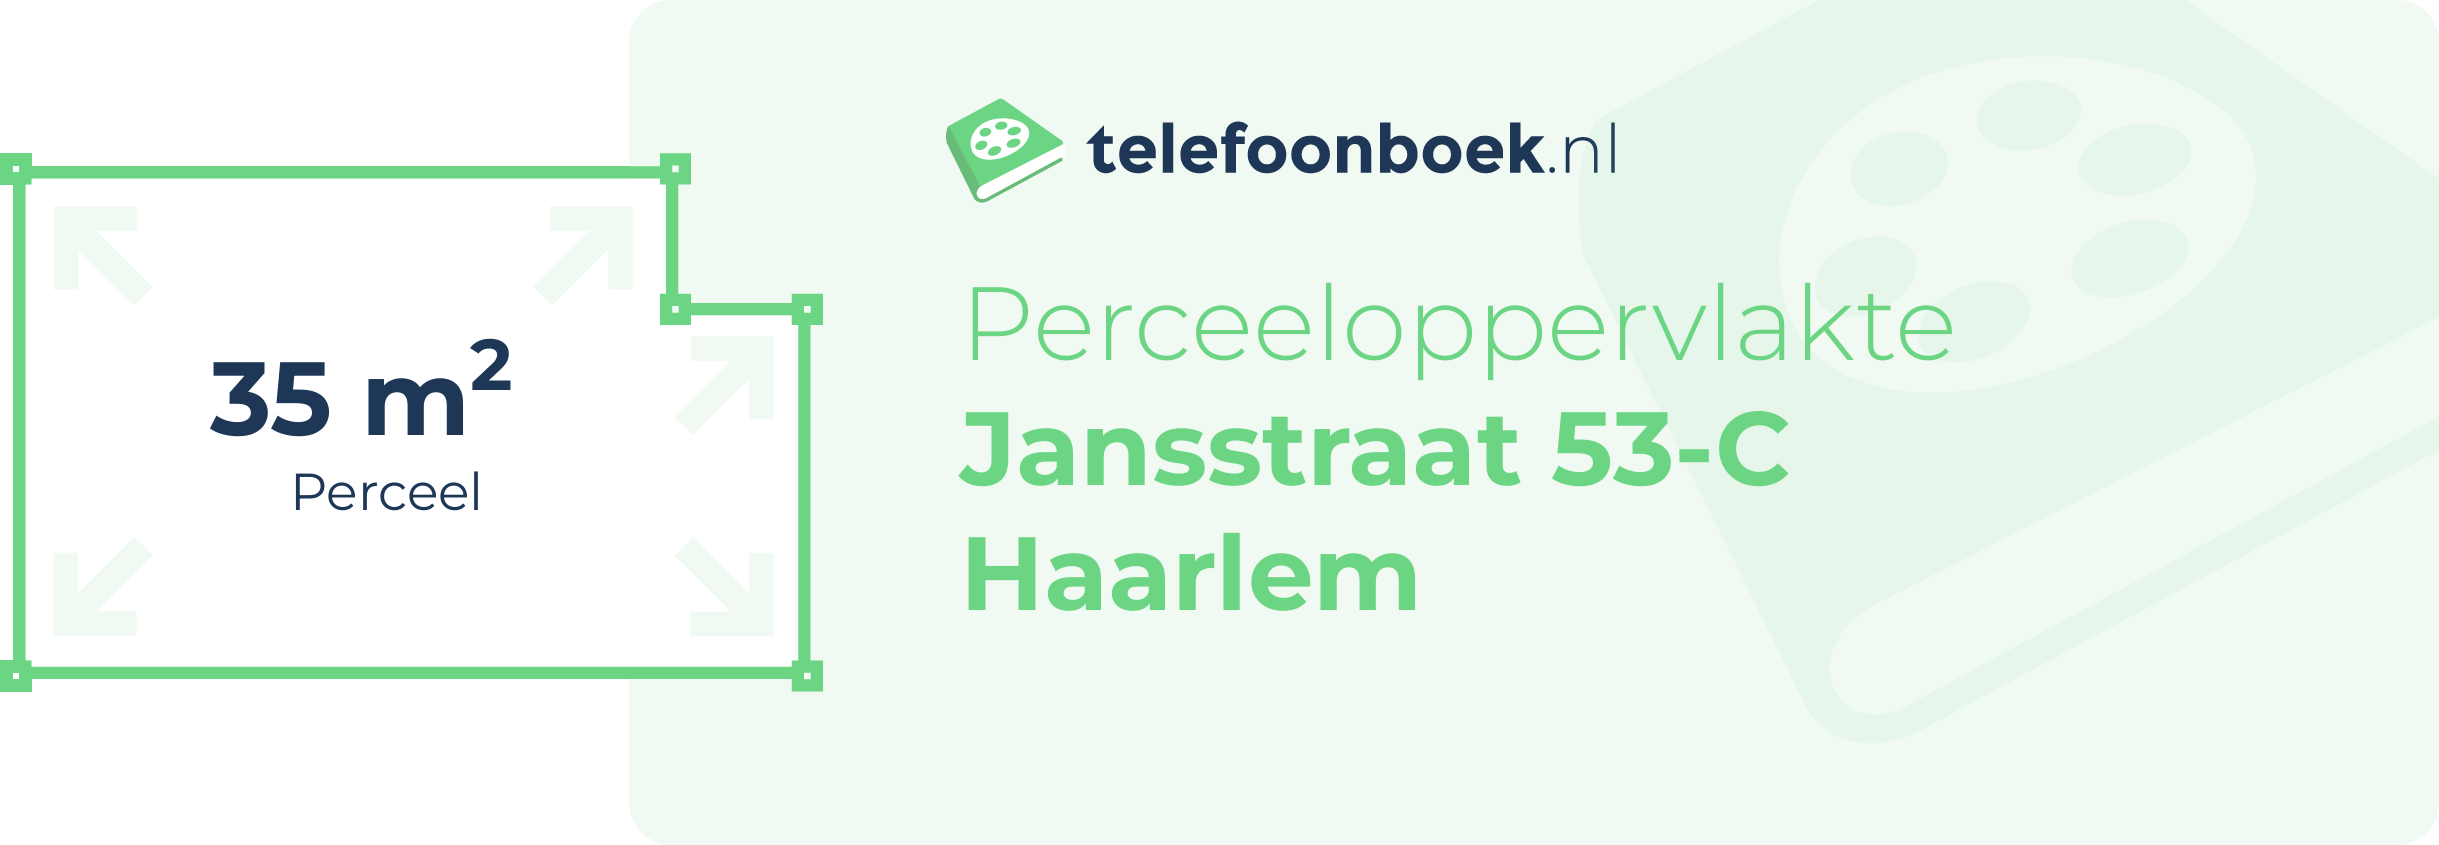 Perceeloppervlakte Jansstraat 53-C Haarlem